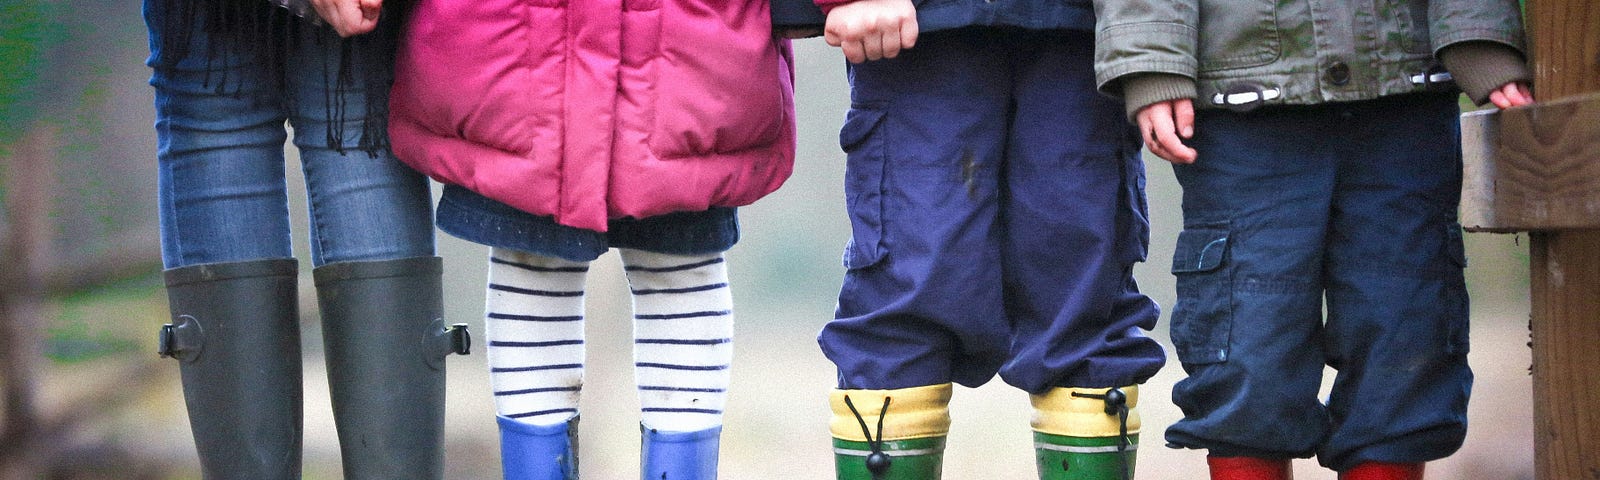 Children standing side by side wearing rain boots